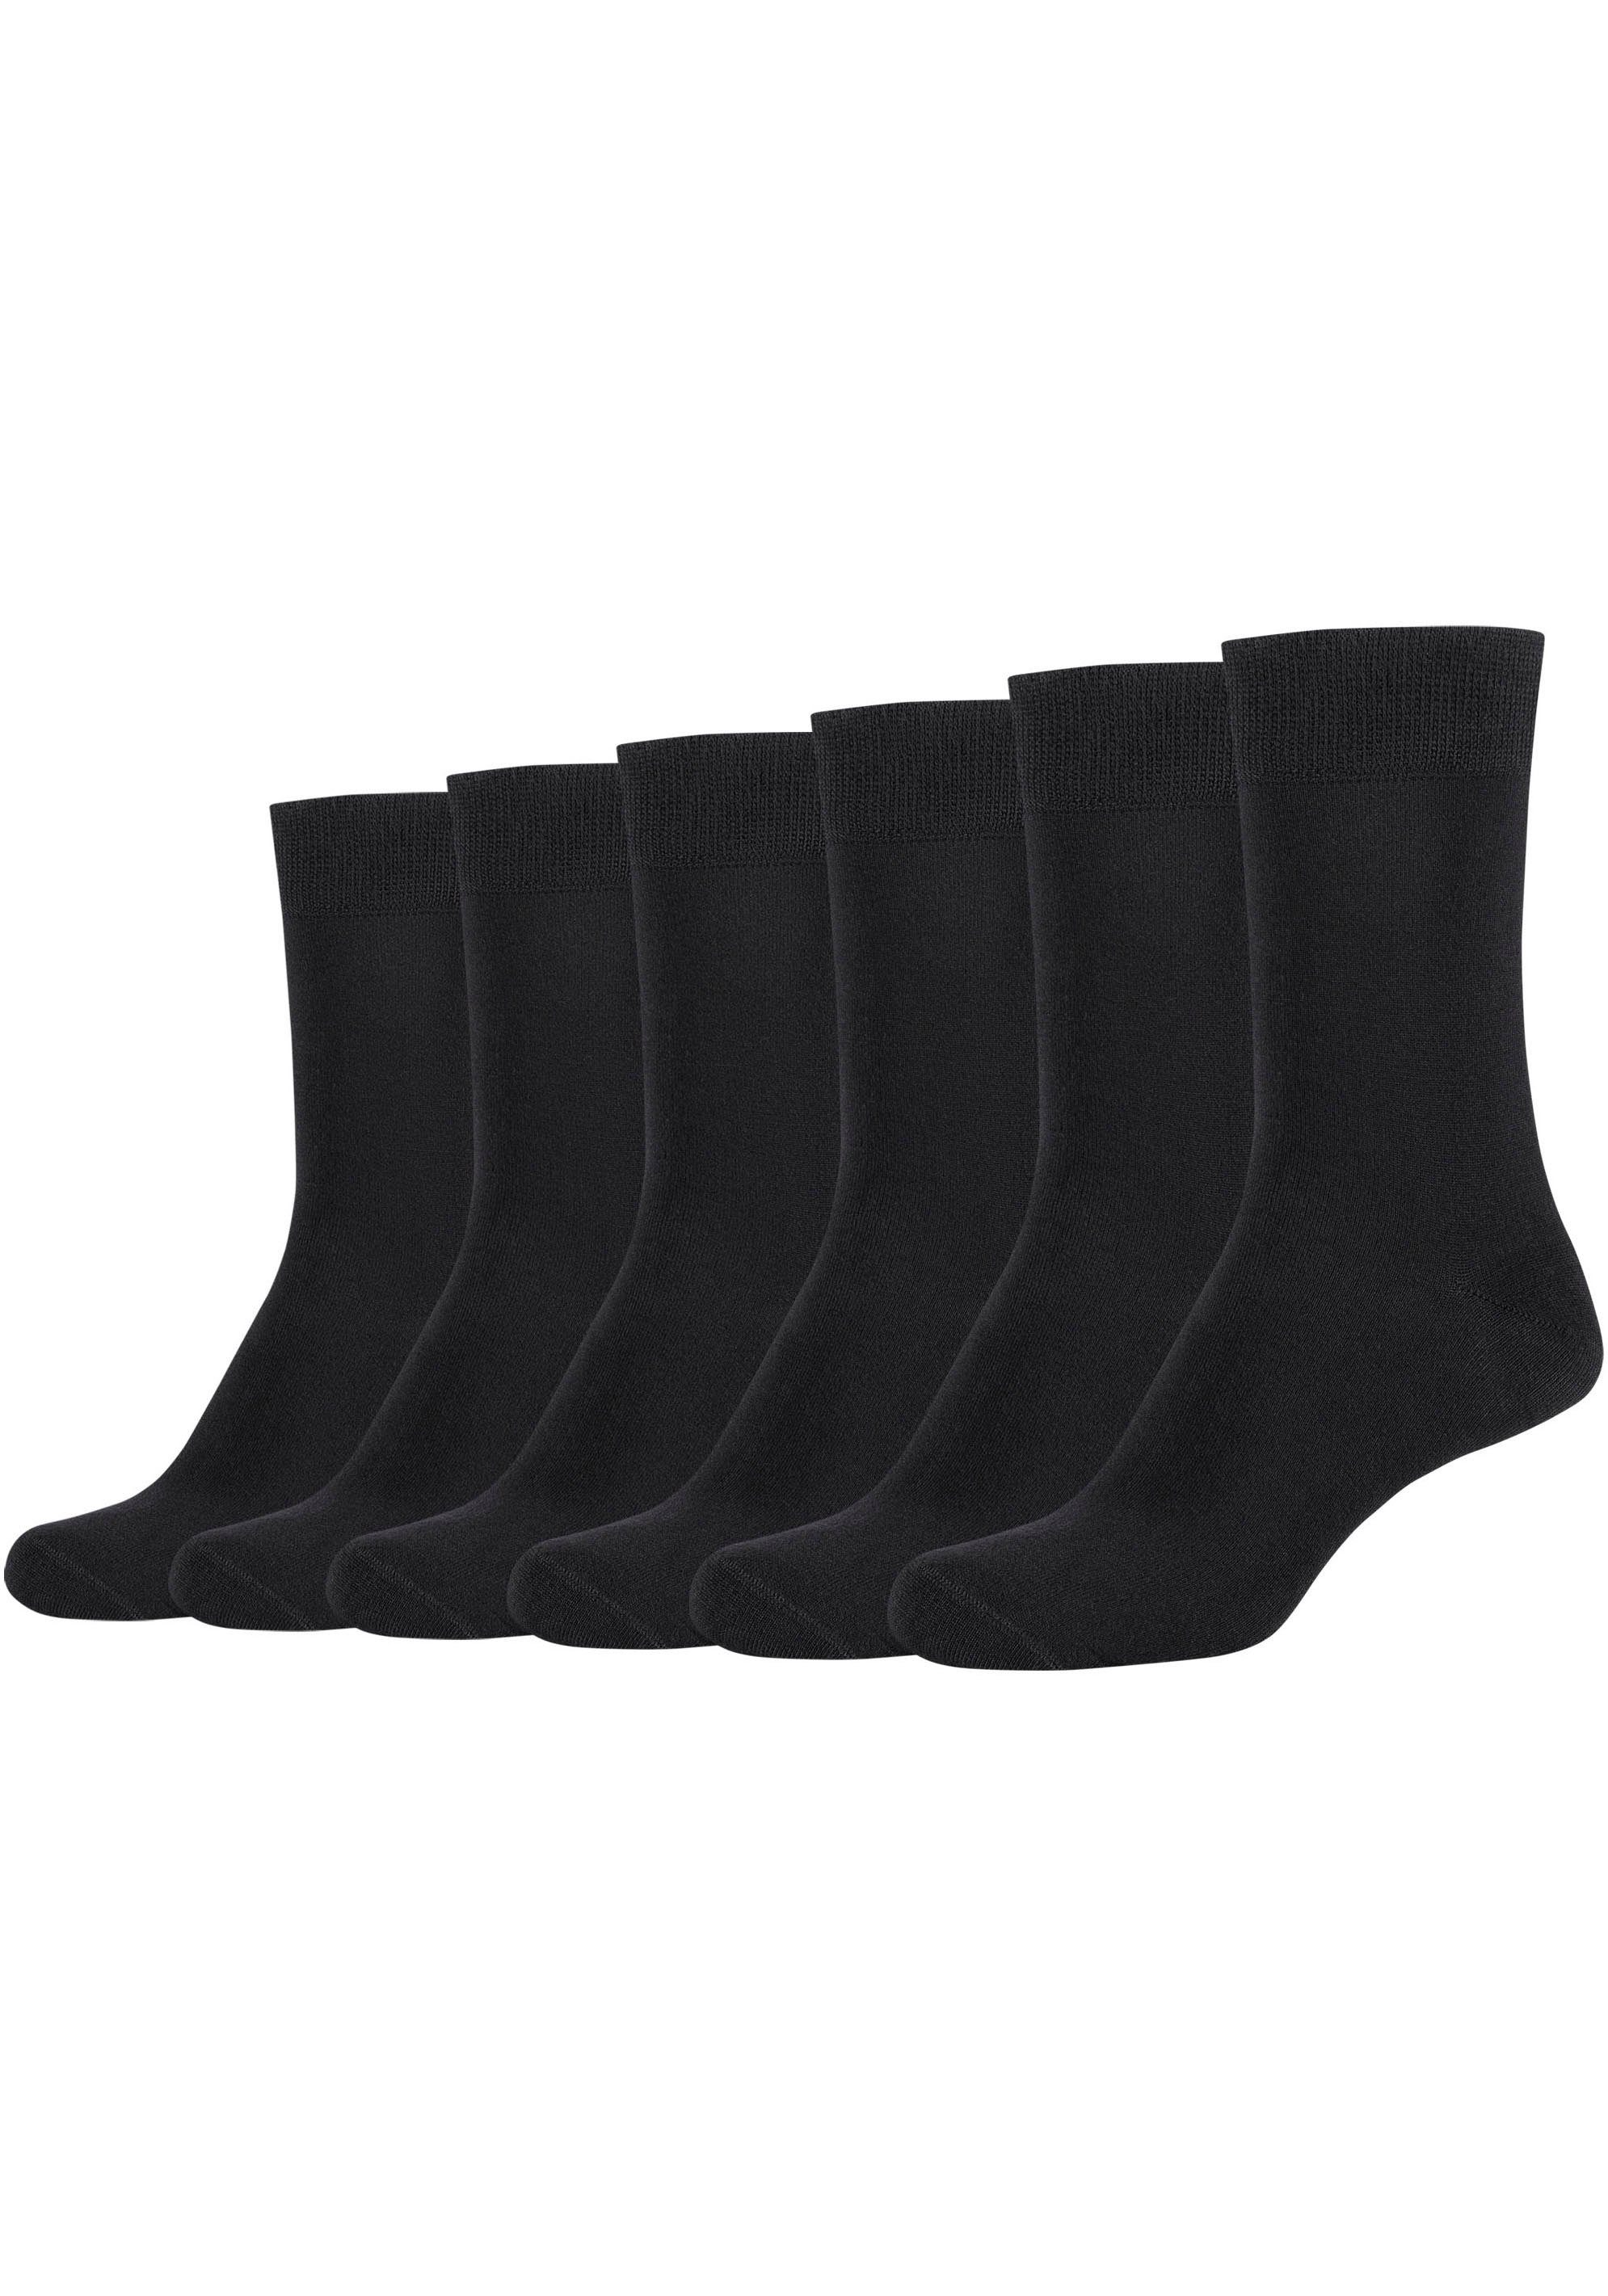 Camano Socken (Packung, 6-Paar) Mit hangekettelter Zehennaht schwarz | Kurzsocken